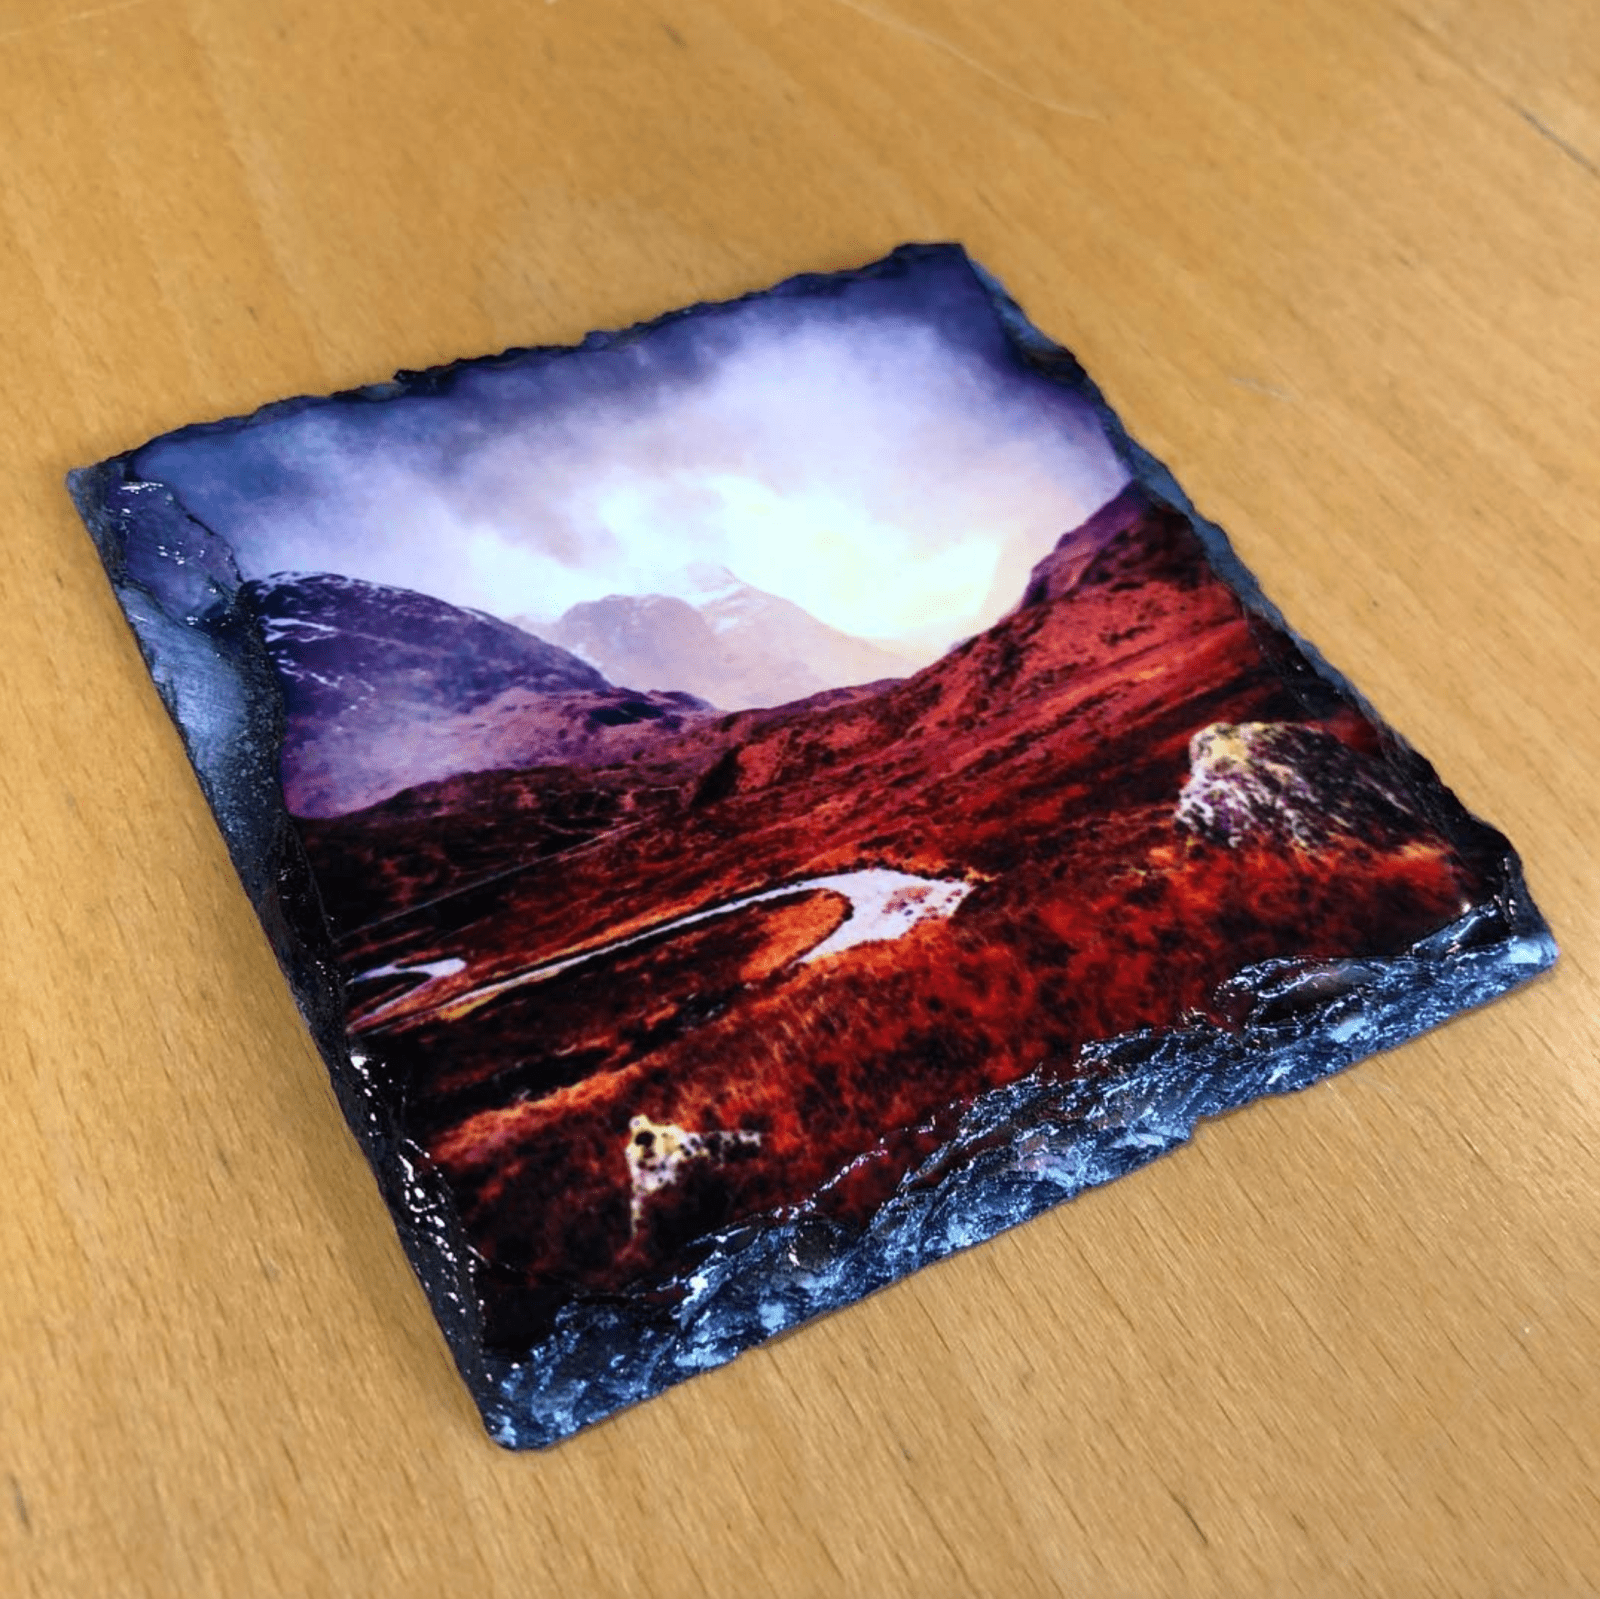 The Fairy Pools Skye Slate Art-Slate Art-Skye Art Gallery-Paintings, Prints, Homeware, Art Gifts From Scotland By Scottish Artist Kevin Hunter